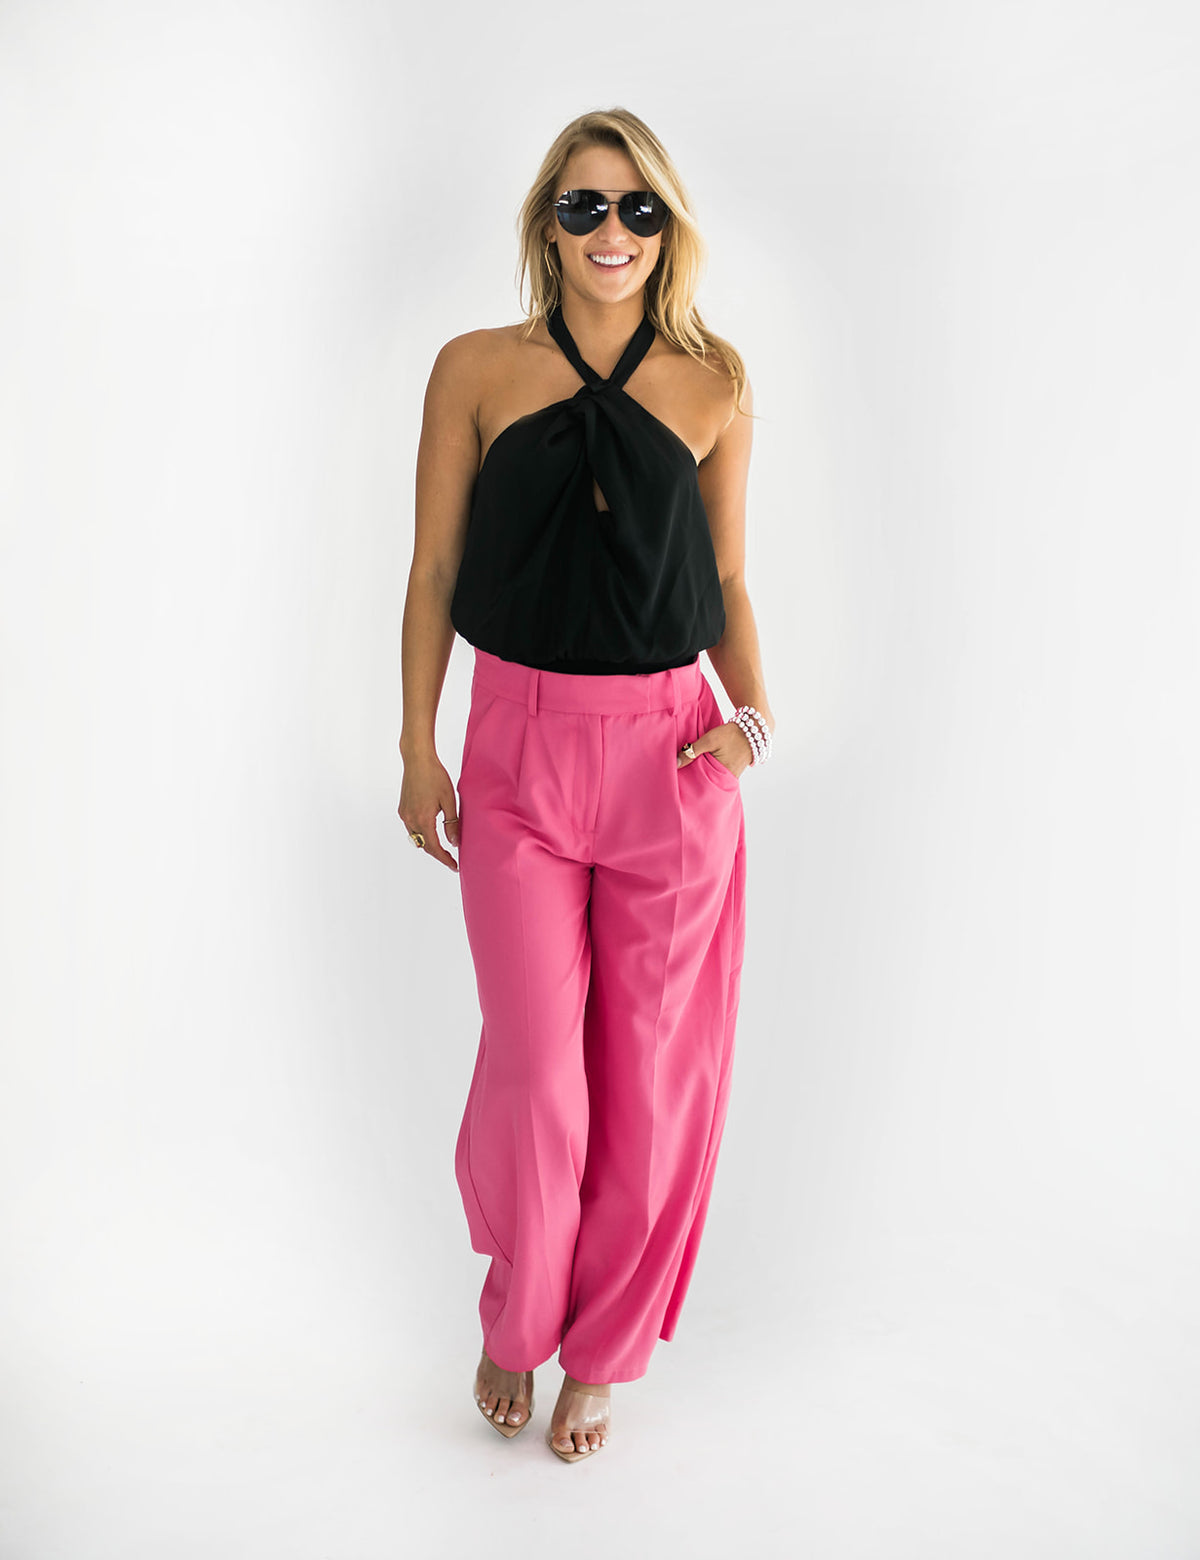 Graycee Trousers Hot Pink